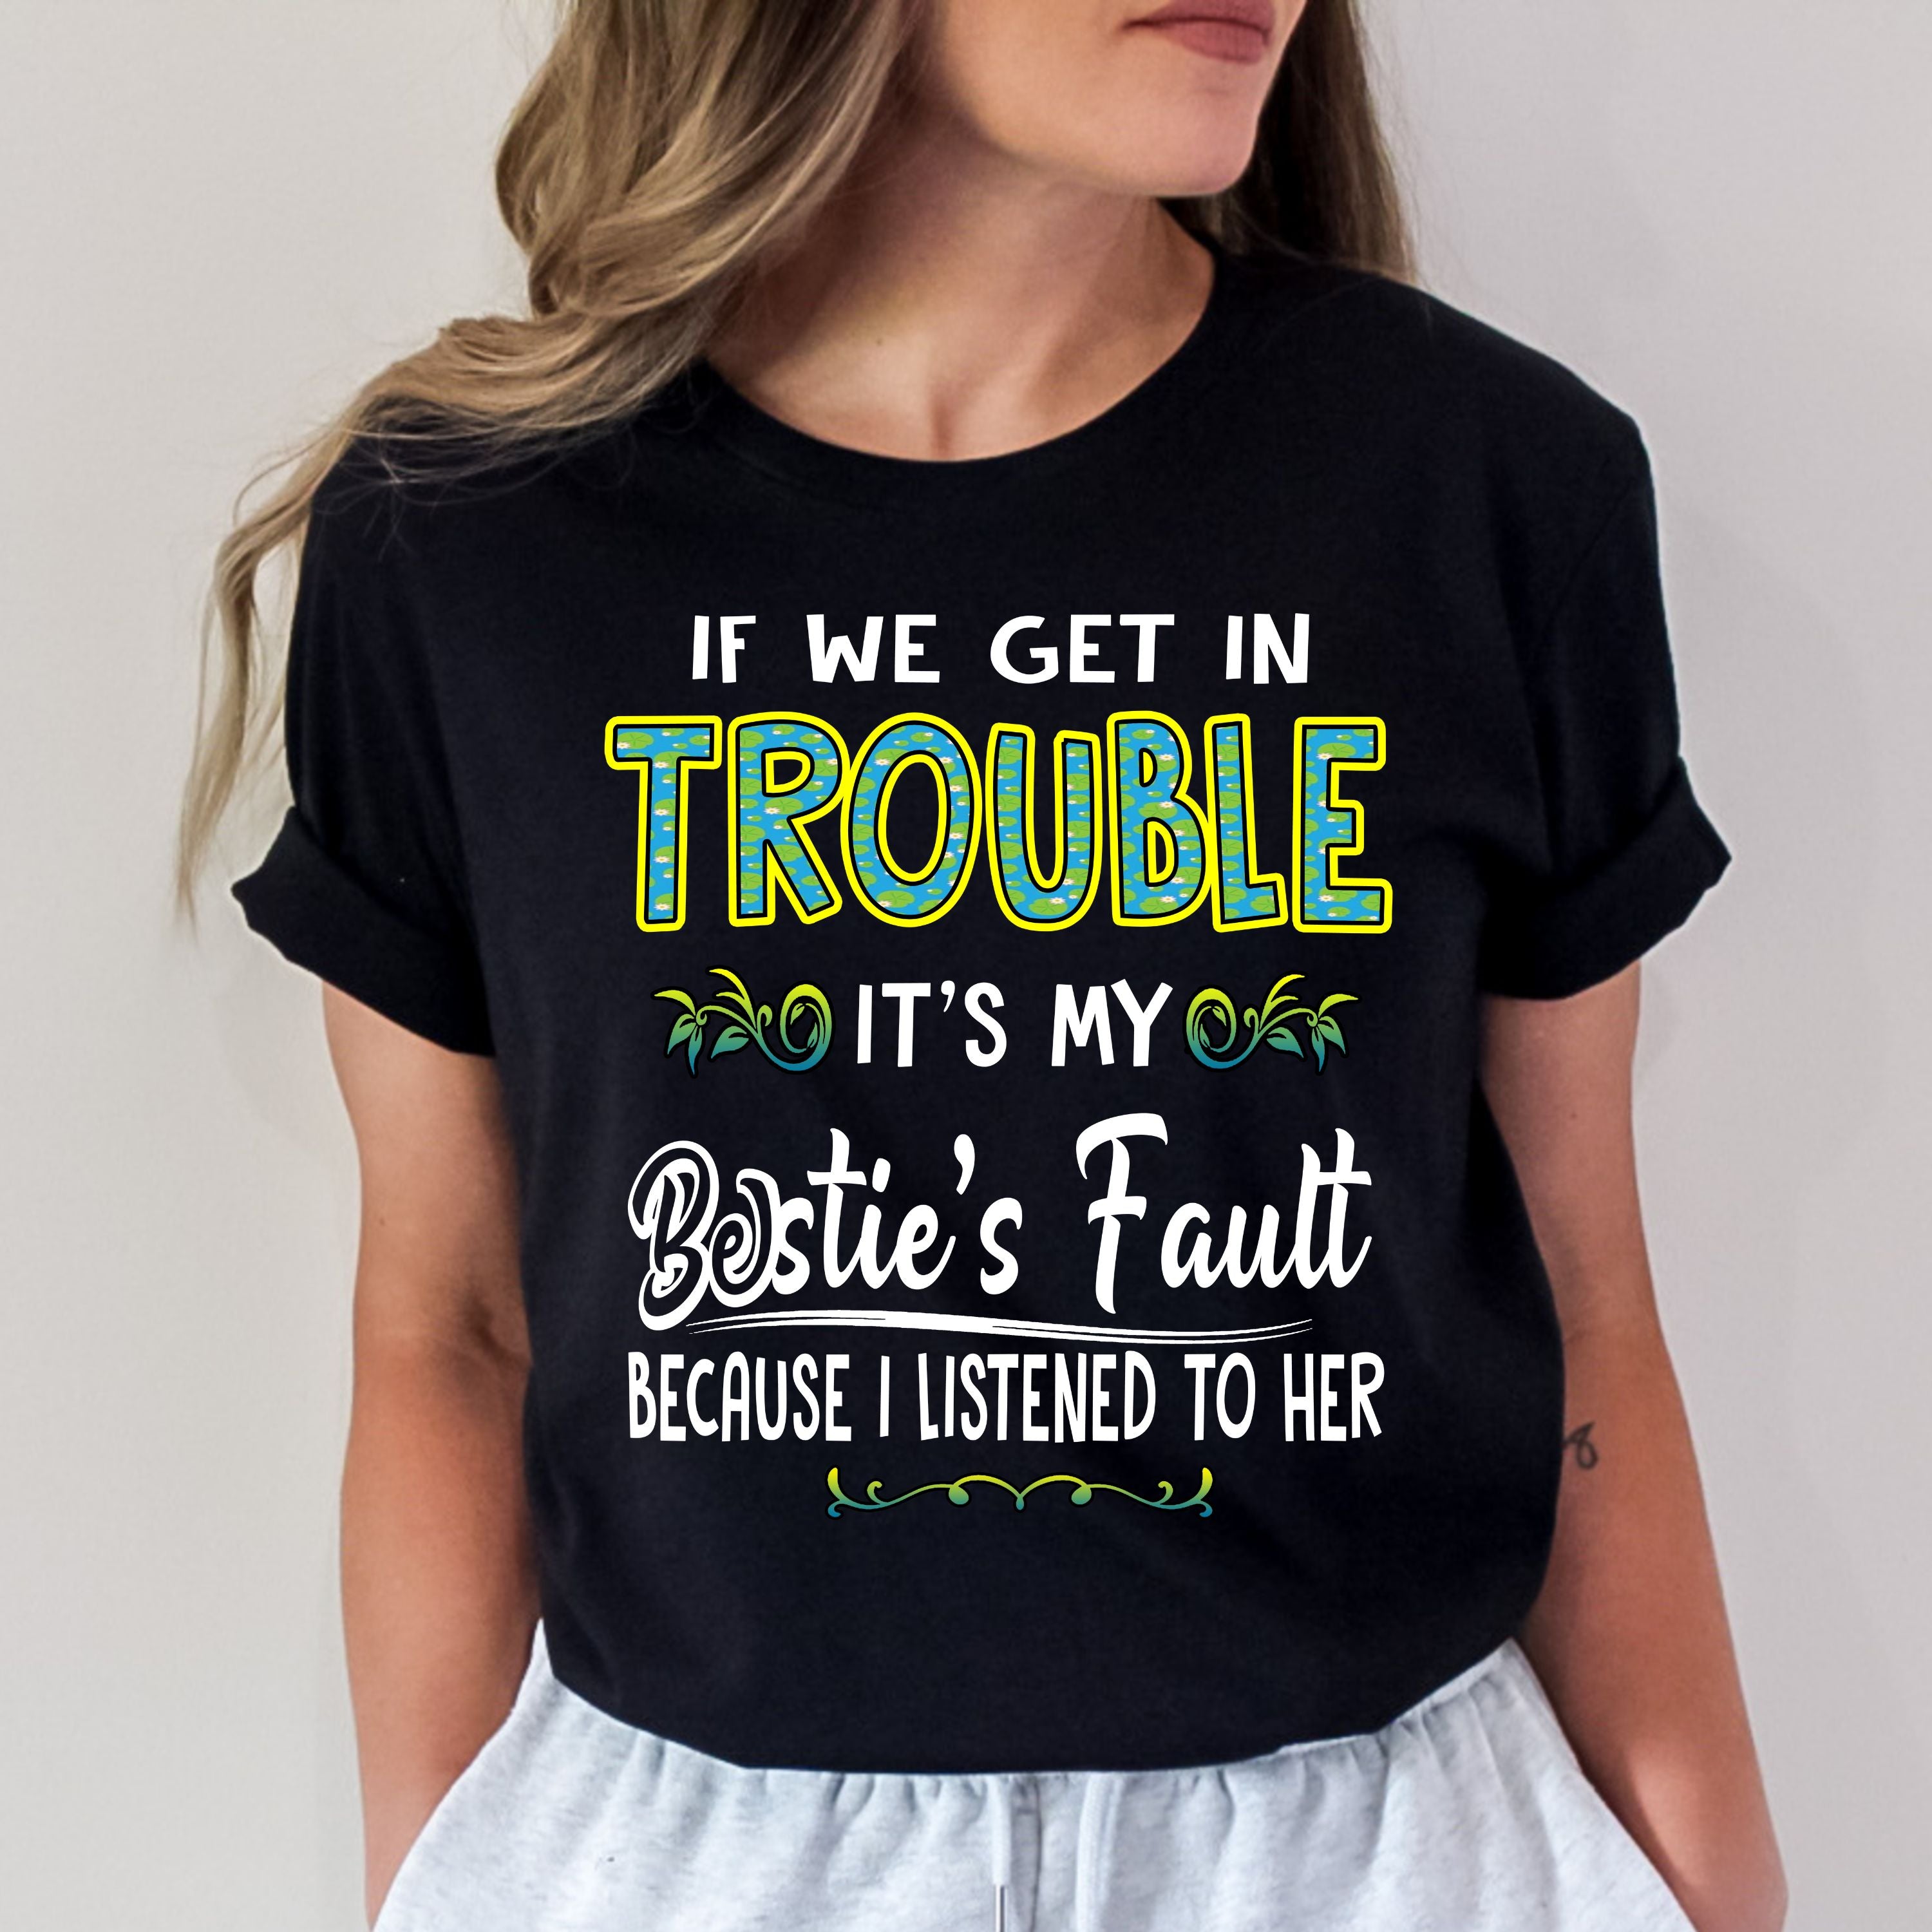 "Bestie's Fault #" T-Shirt